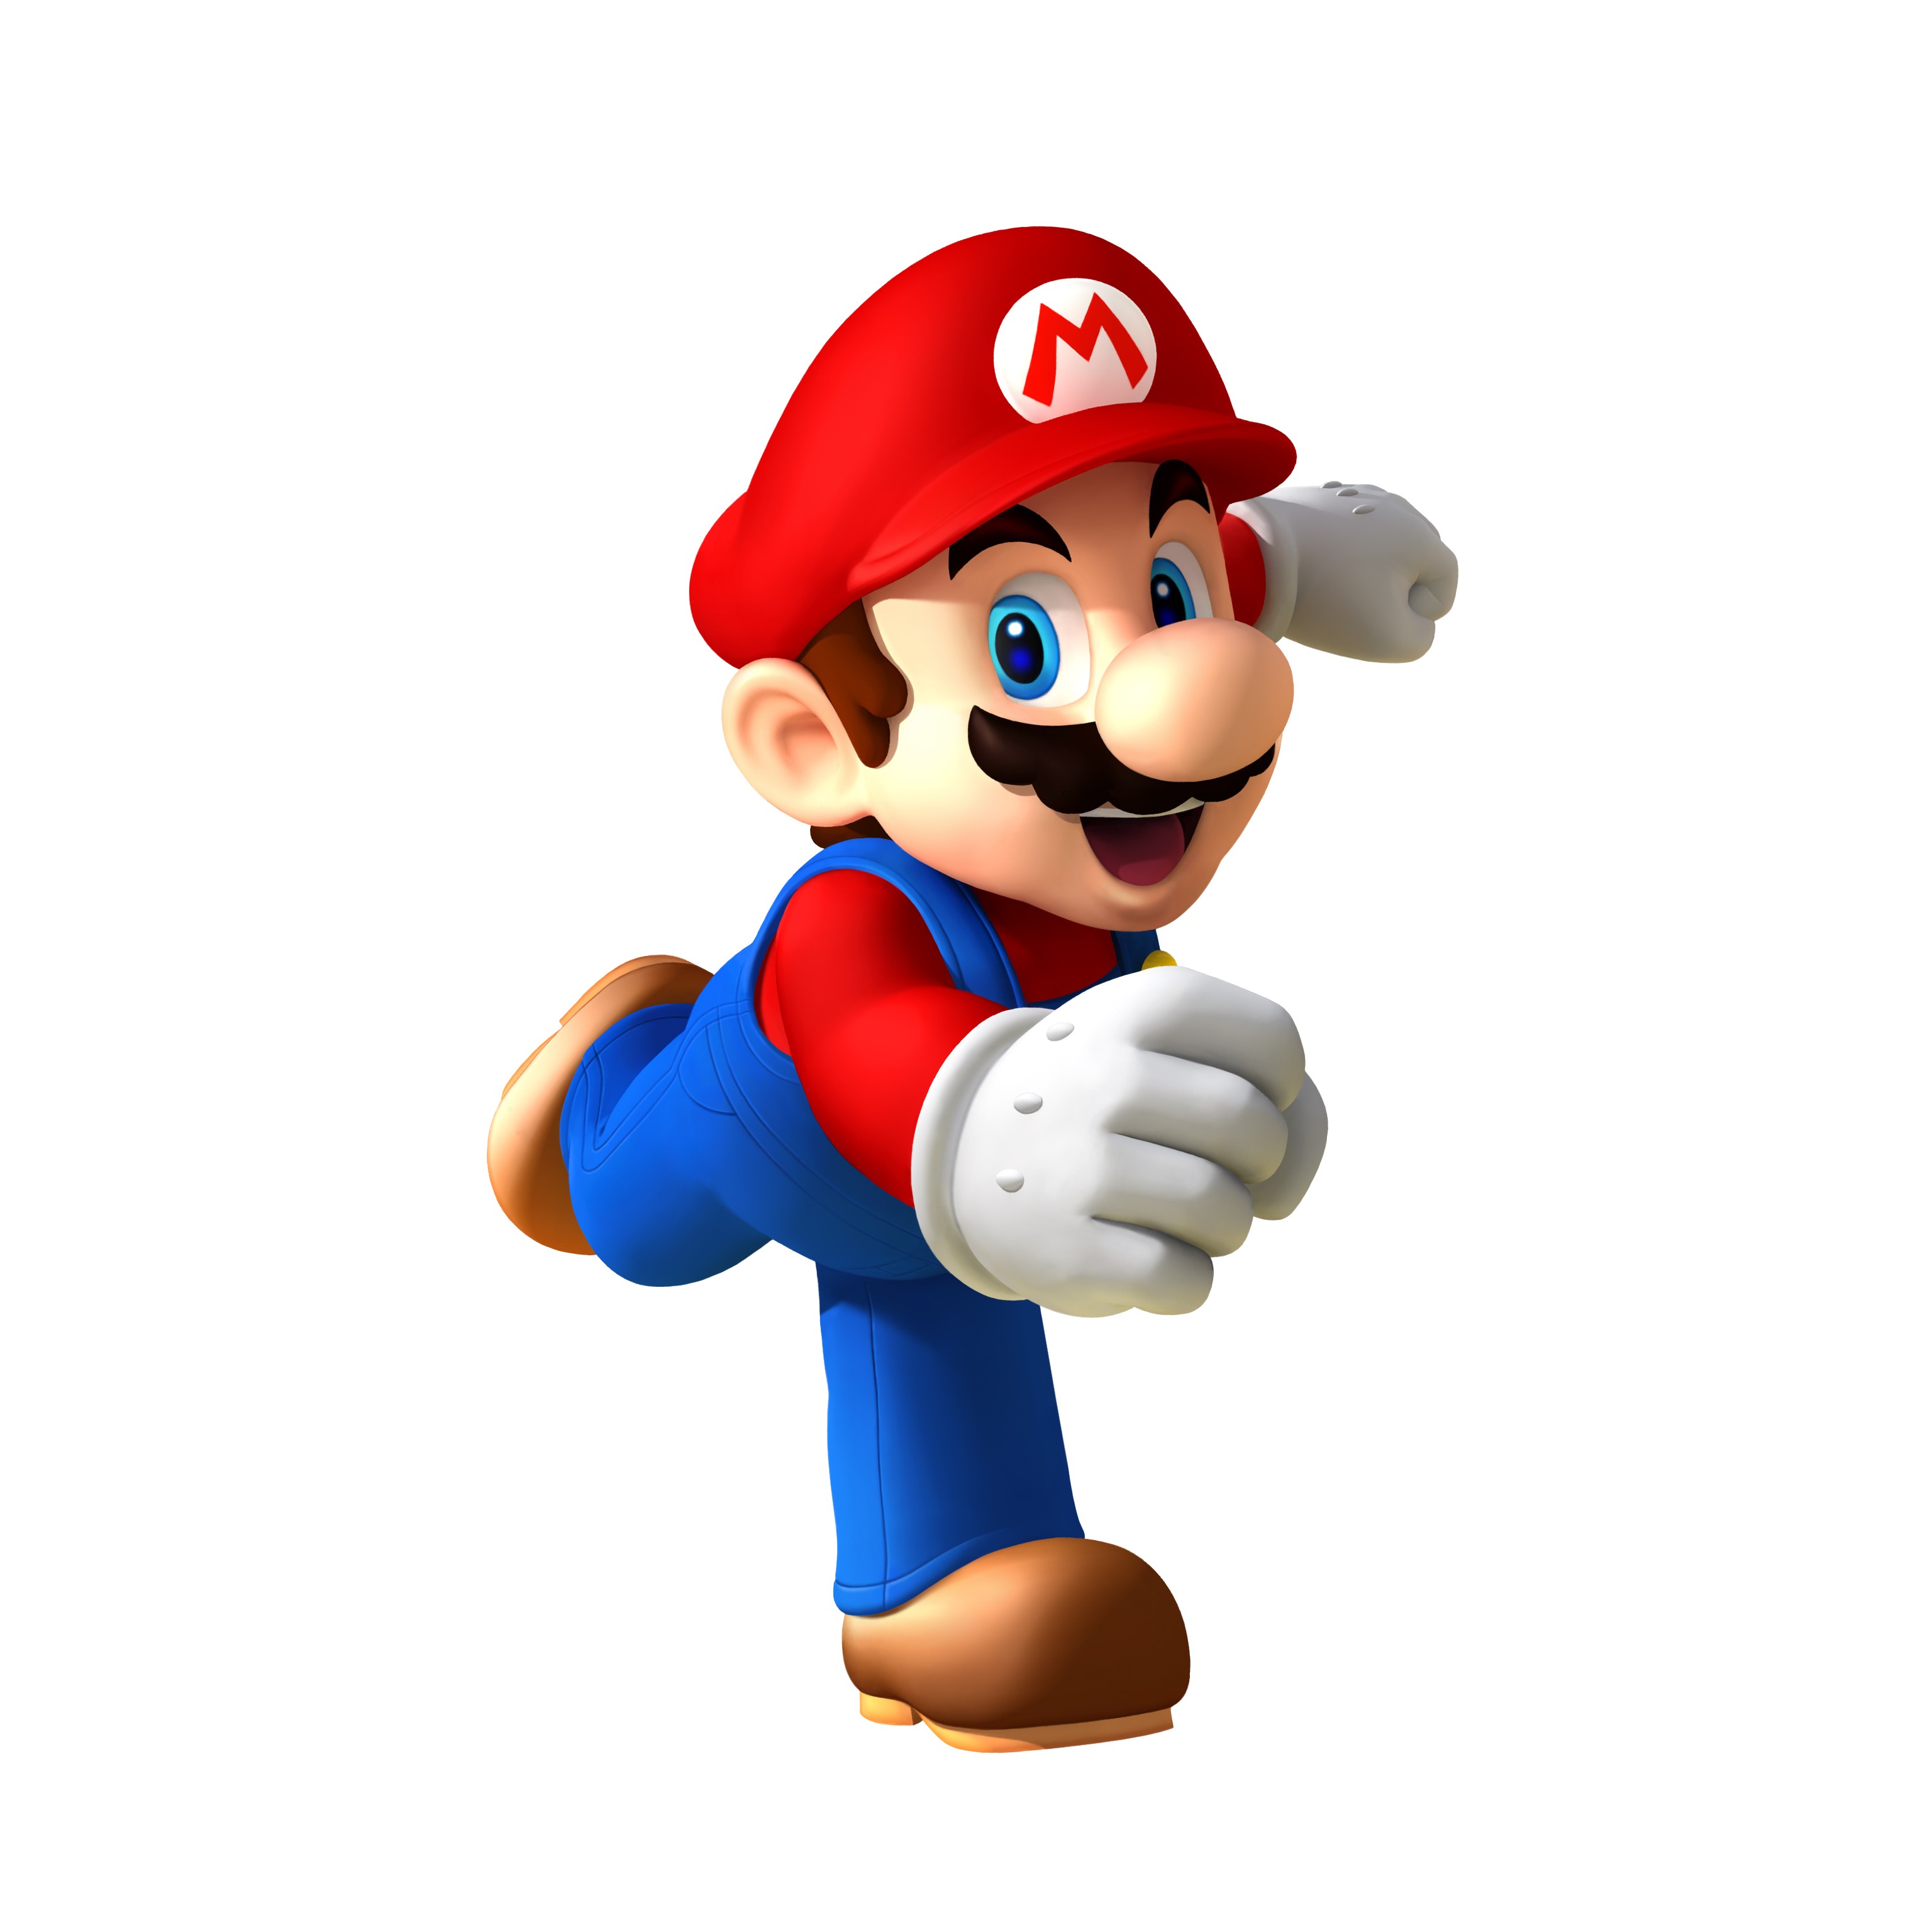 List 95+ Wallpaper Imagenes De Super Mario Bros Full HD, 2k, 4k